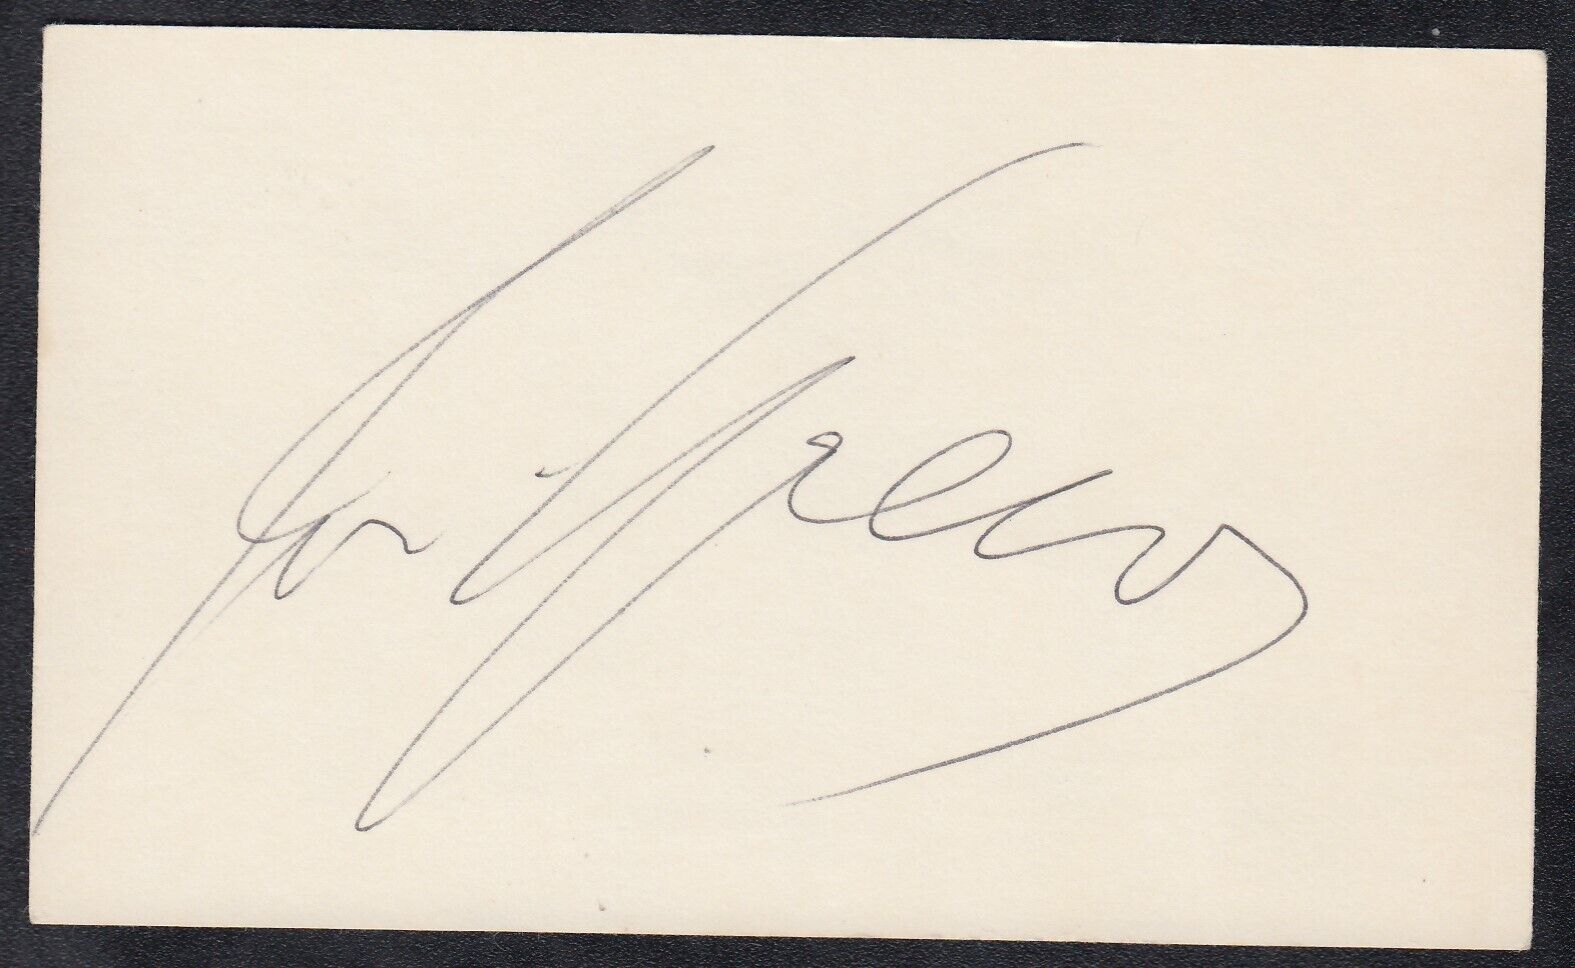 Jose JOSÉ GRECO  Flamenco Dancer 3x5 Signed Index Card Autograph